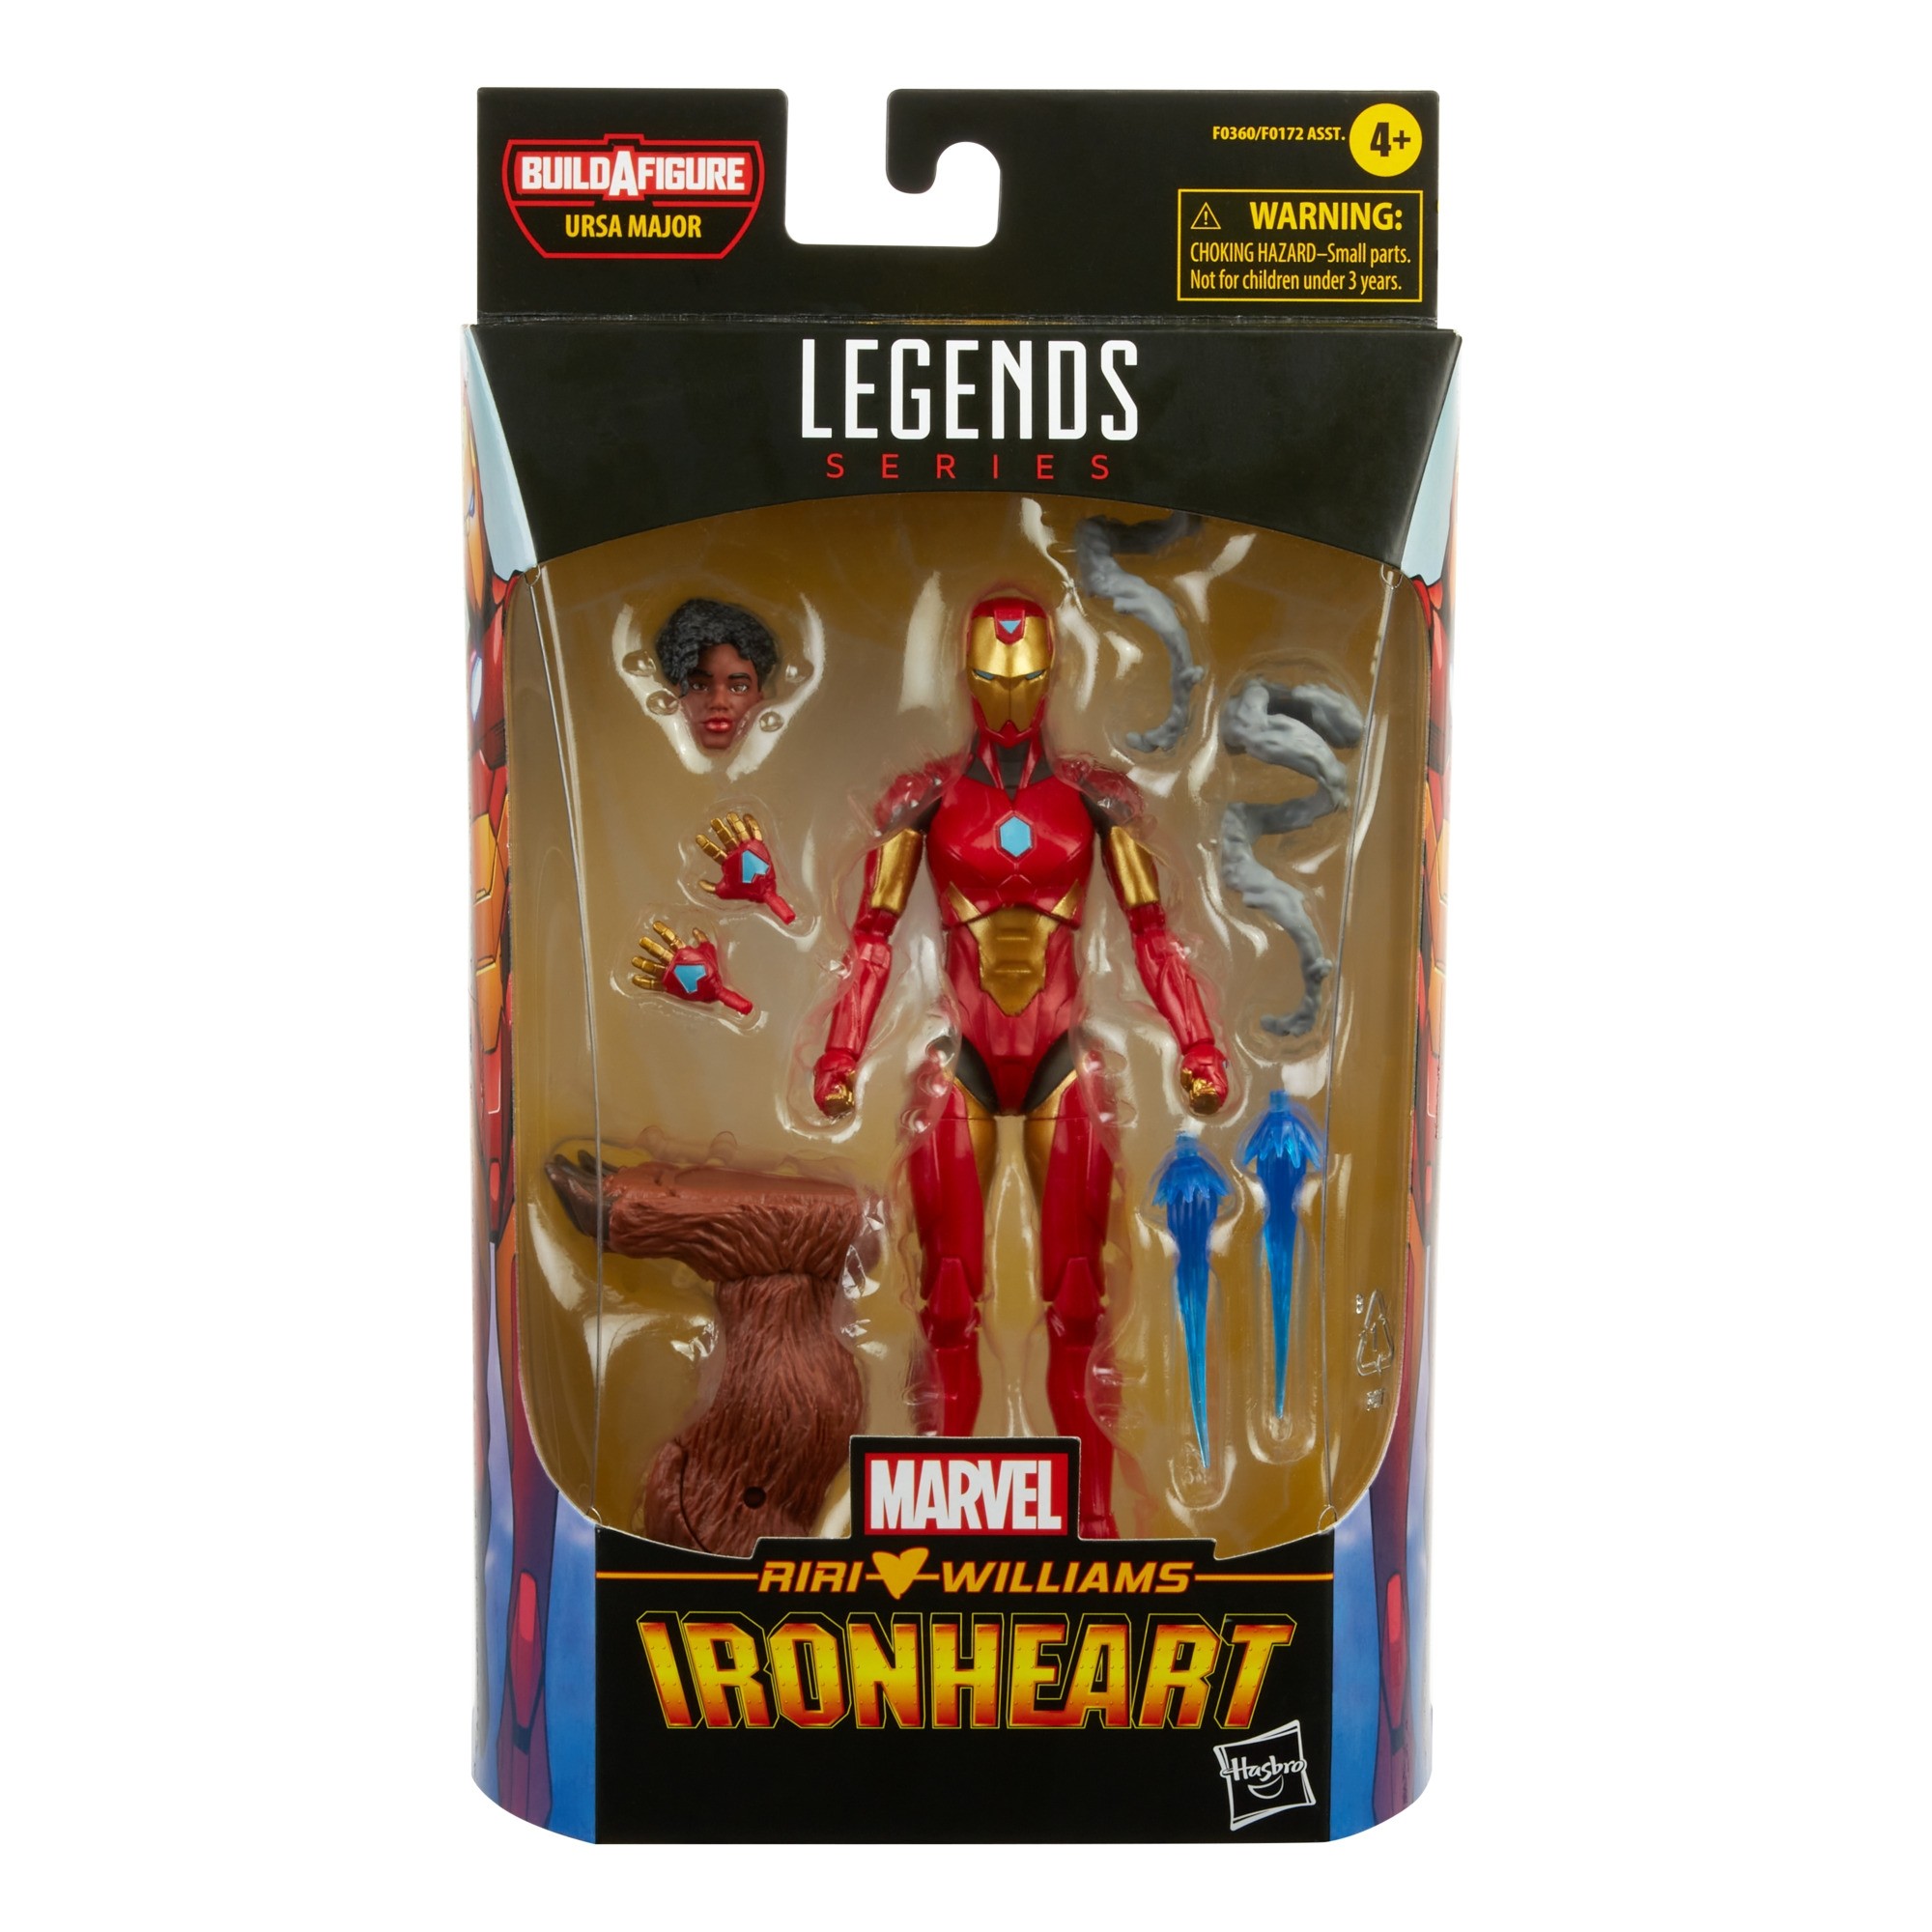 Marvel Legends Irongeart Action Figure